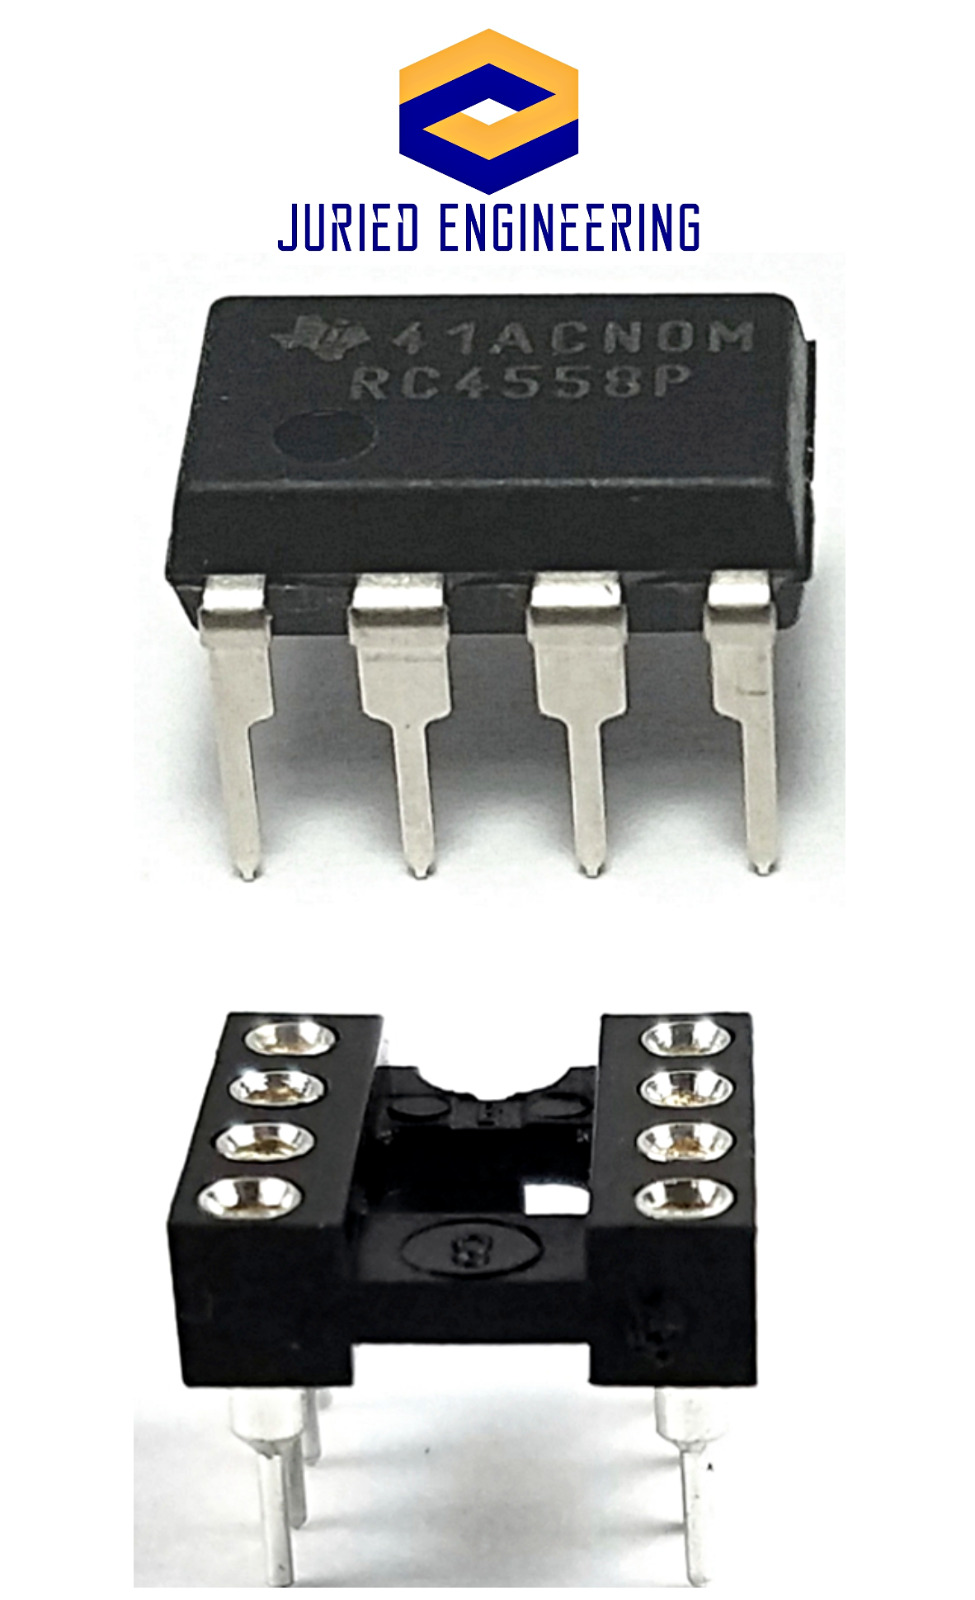 5PCS RC4558 + Sockets Dual Operational Amplifier DIP-8 New IC